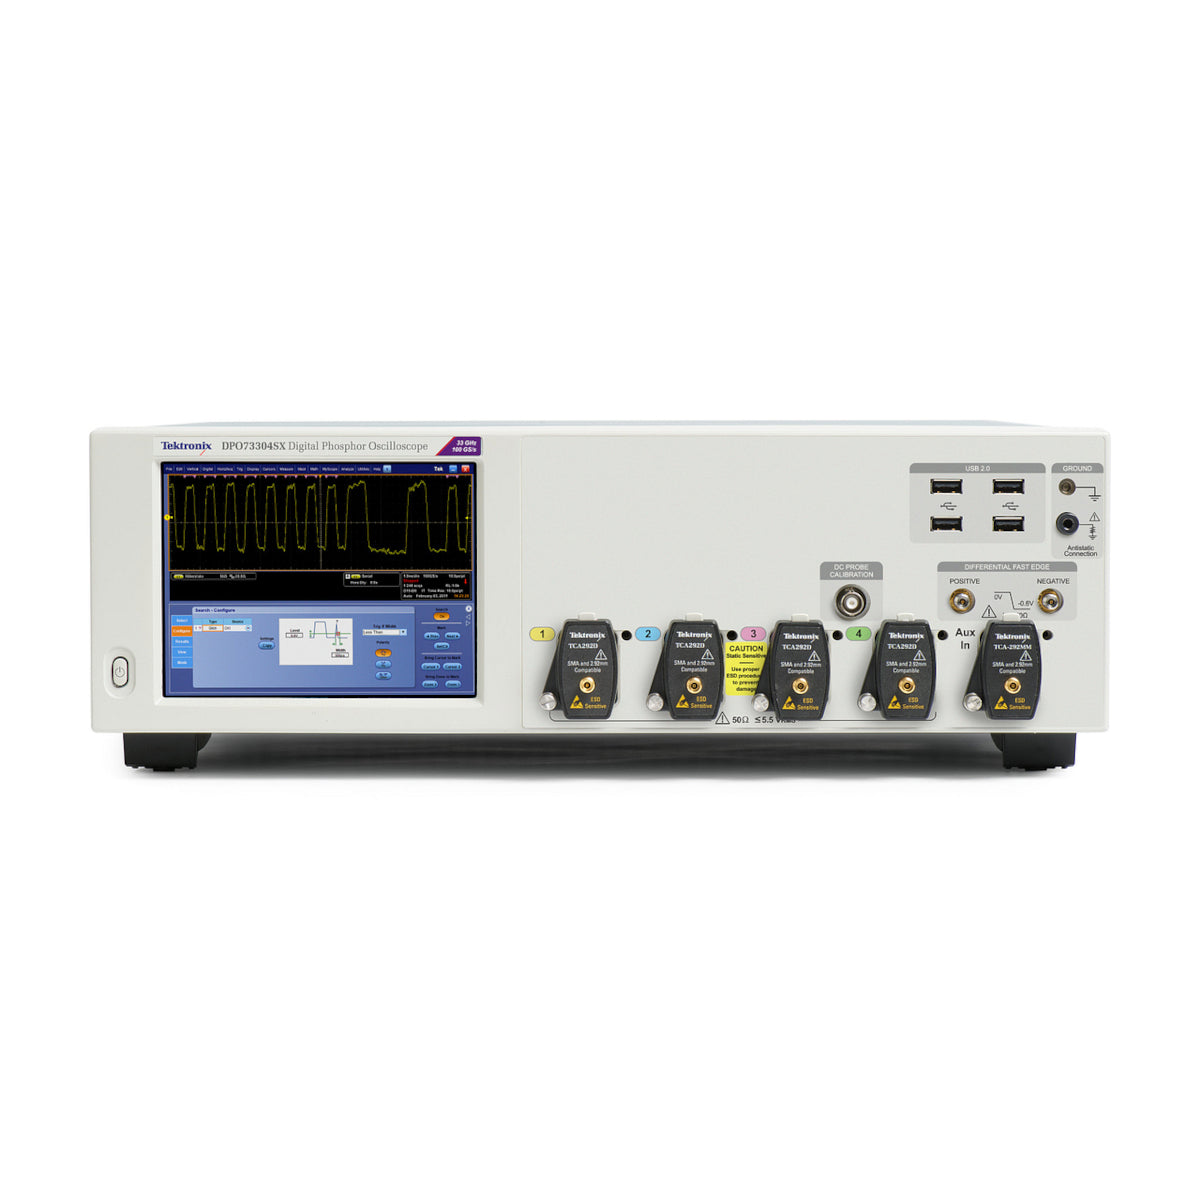 Tektronix DPO77004SX Scalable Performance Oscilloscope